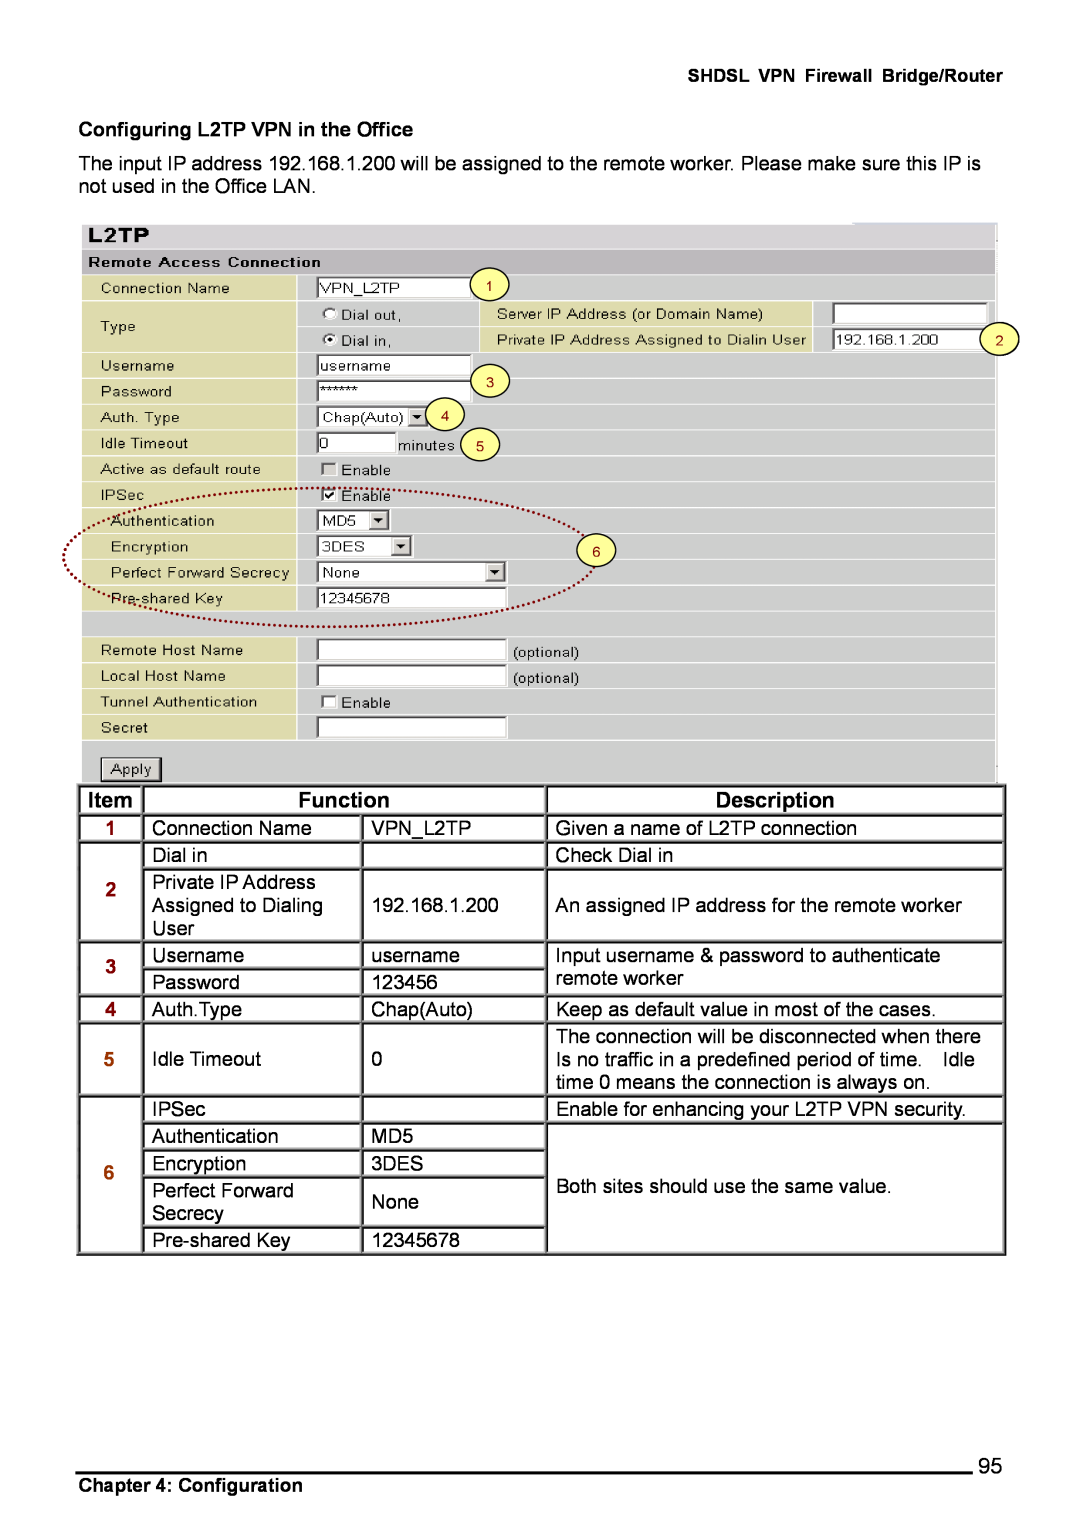 Billion Electric Company 8501 user manual Function, Description, Configuring L2TP VPN in the Office 